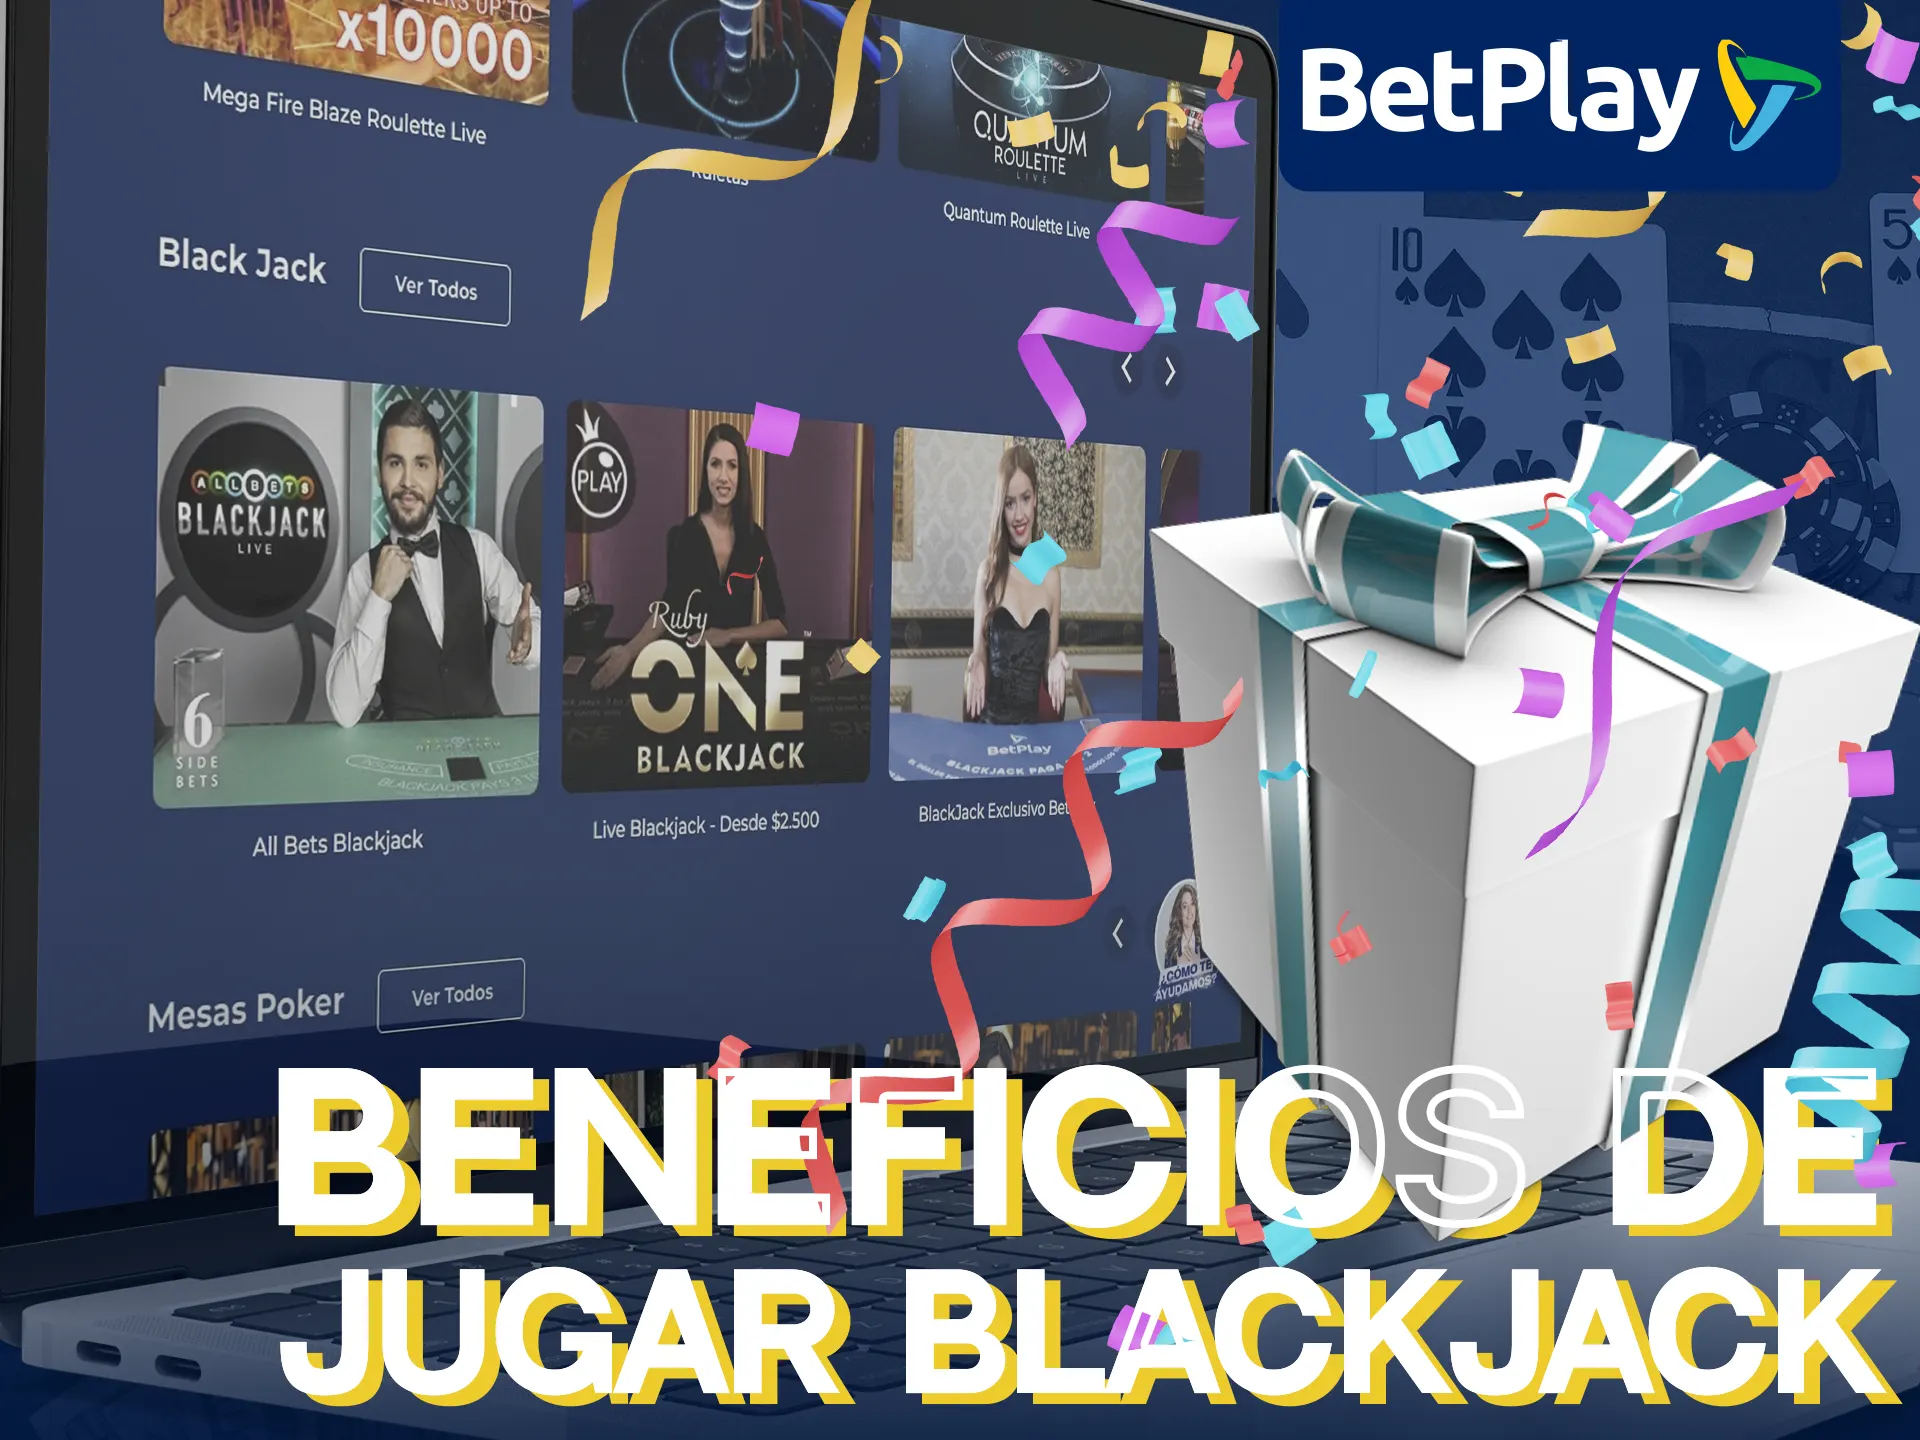 Jugar al Blackjack en BetPlay tiene muchas ventajas.